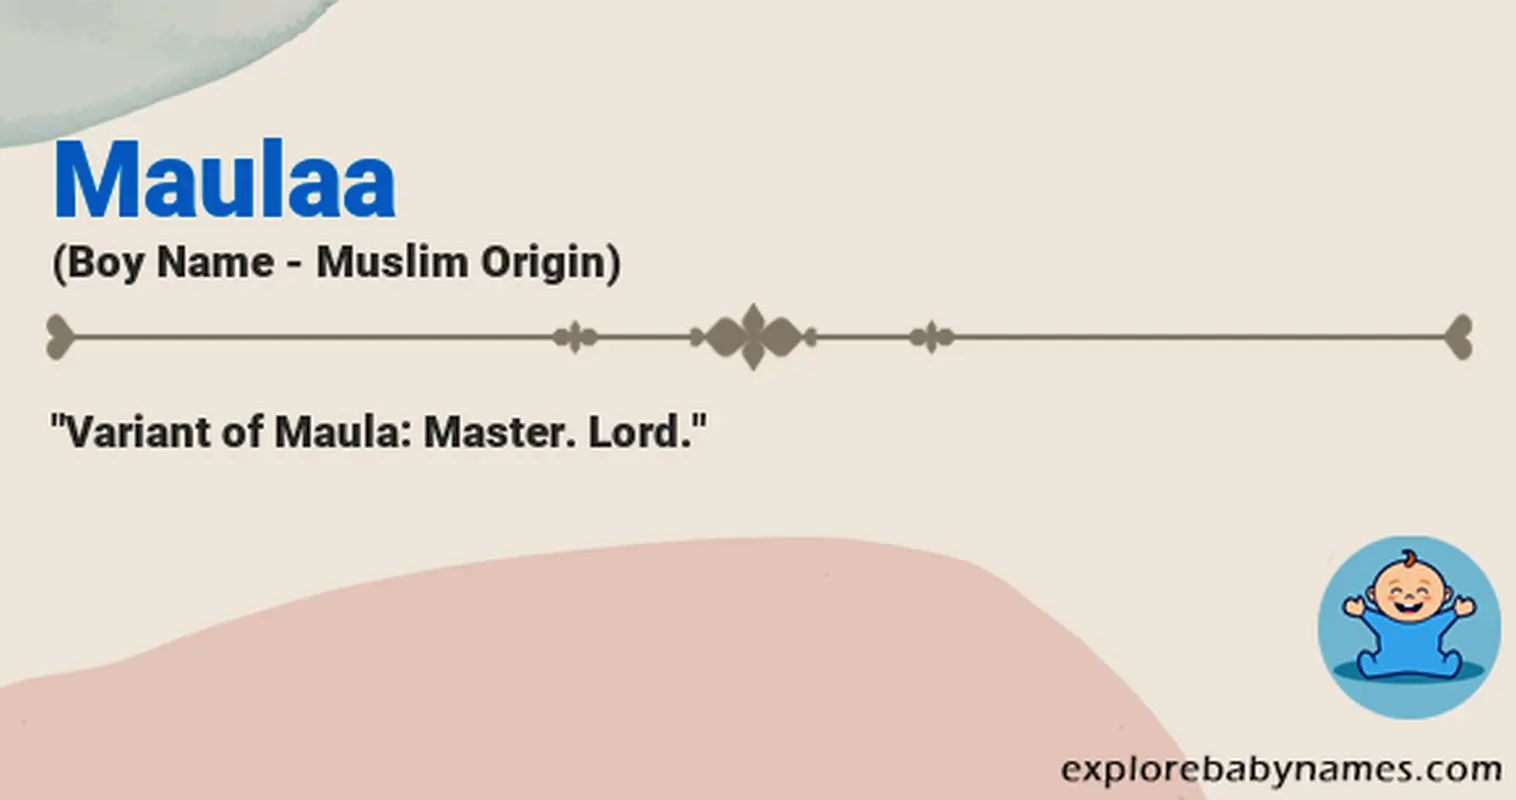 Meaning of Maulaa